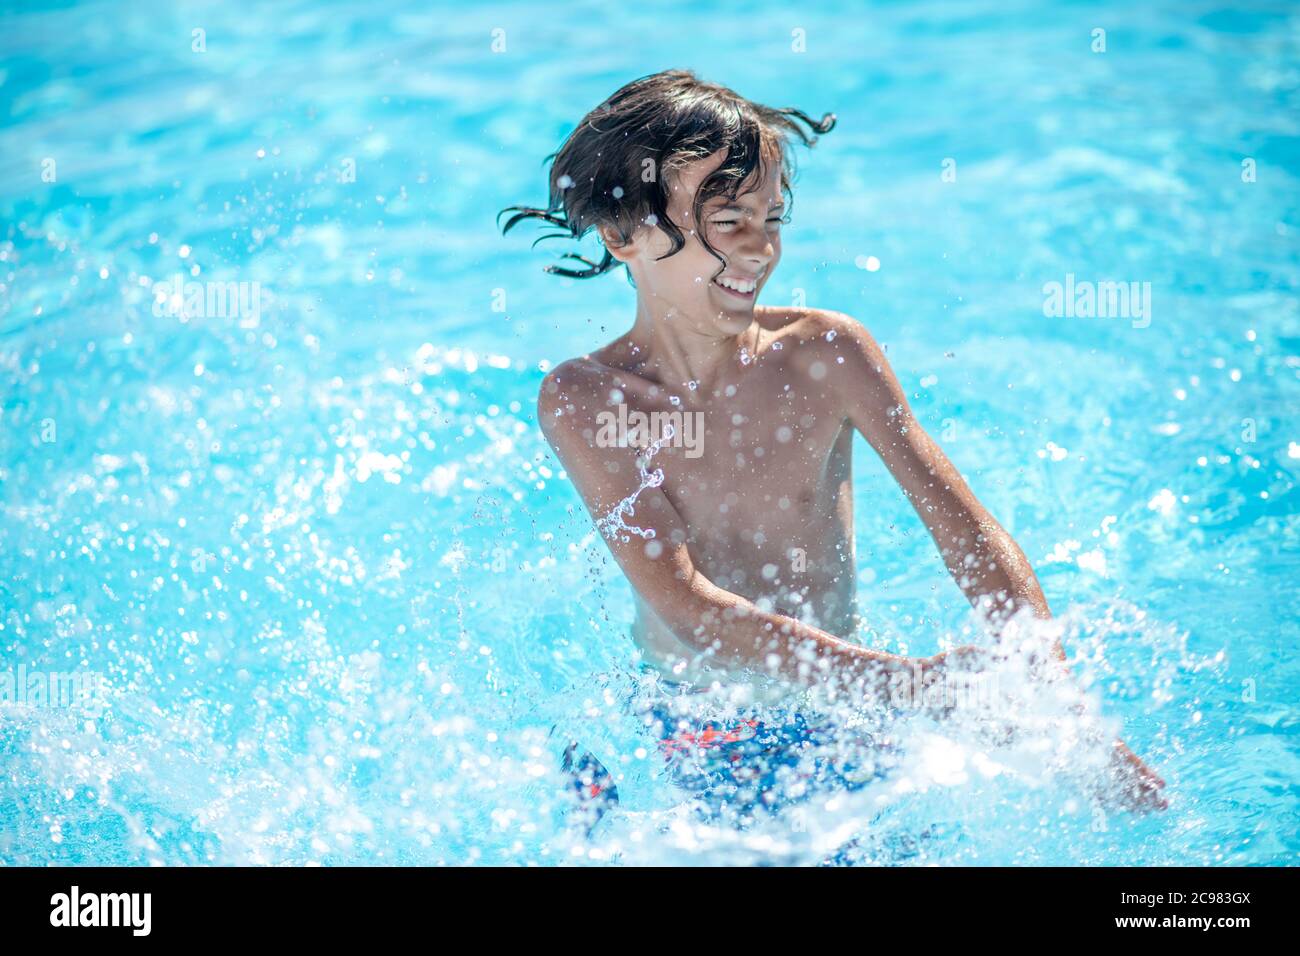 Energetic boy standing in water making splashes Stock Photo